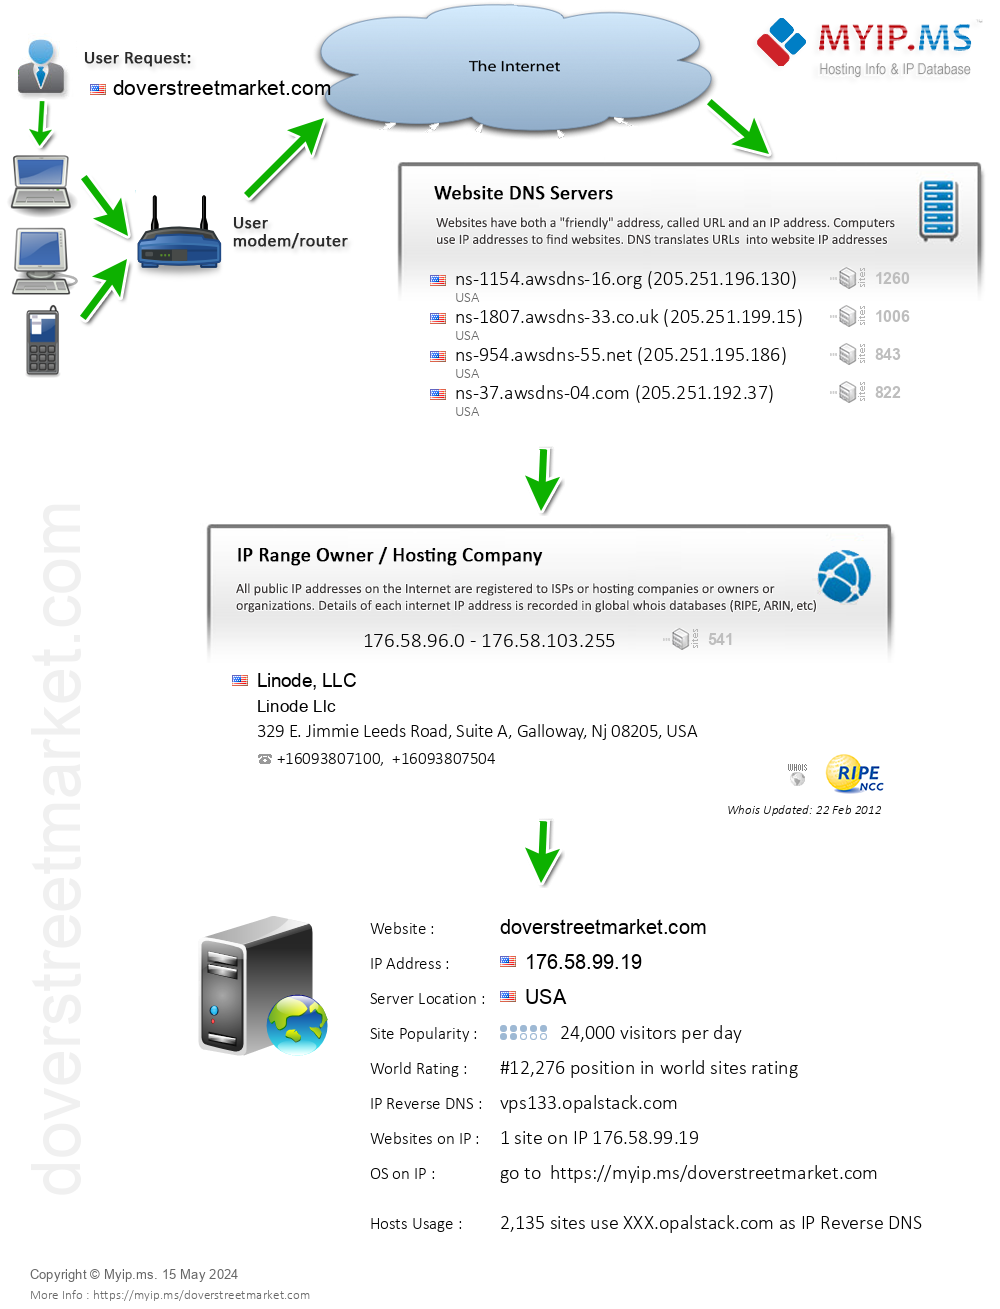 Doverstreetmarket.com - Website Hosting Visual IP Diagram